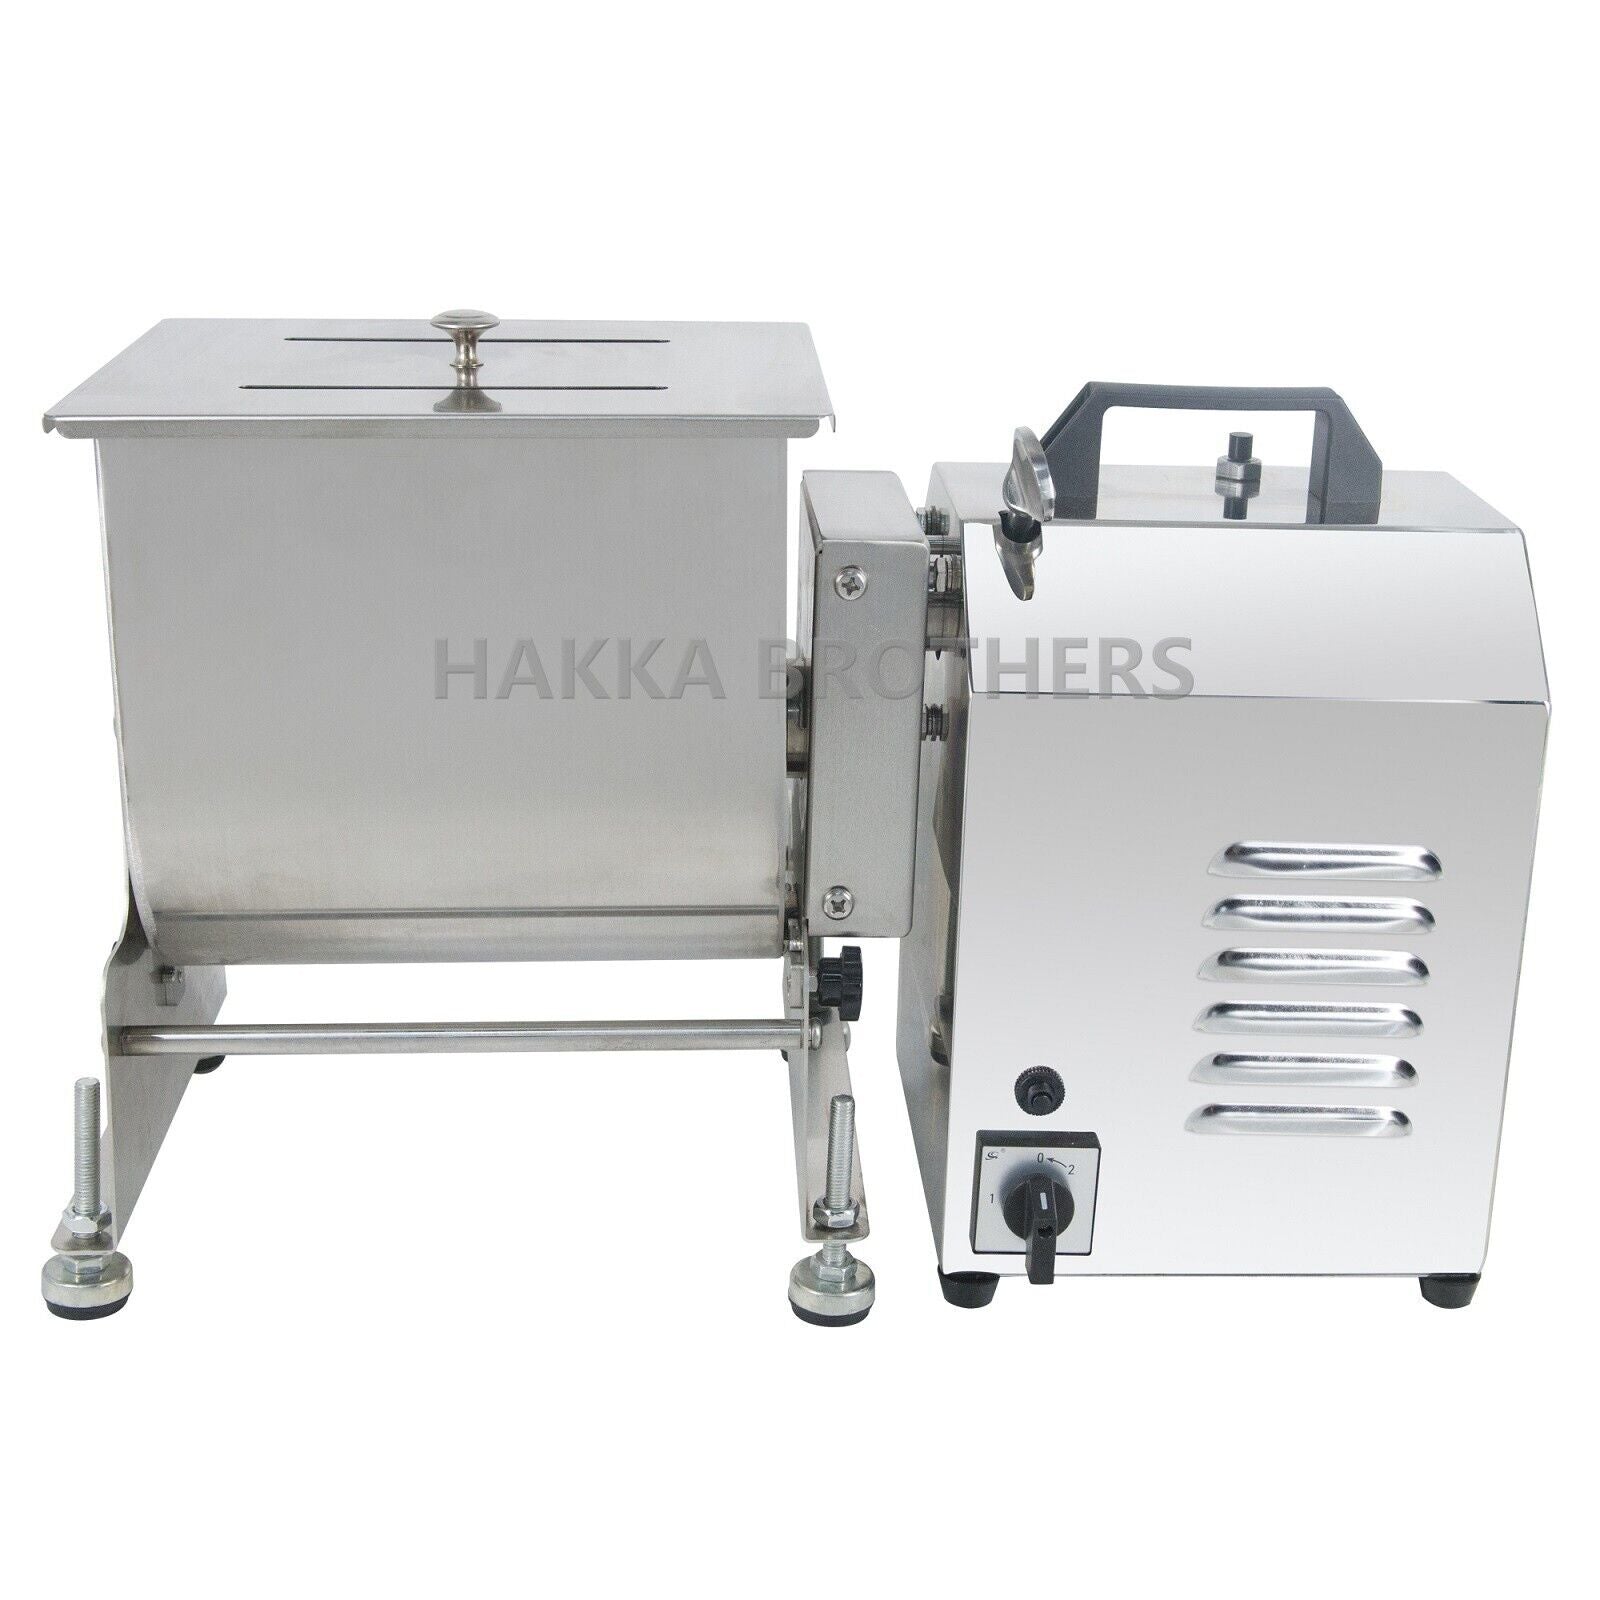 Hakka Electric 45lbs 22.5L Tilt Tank Meat Mixer Commercial Countertop Machine